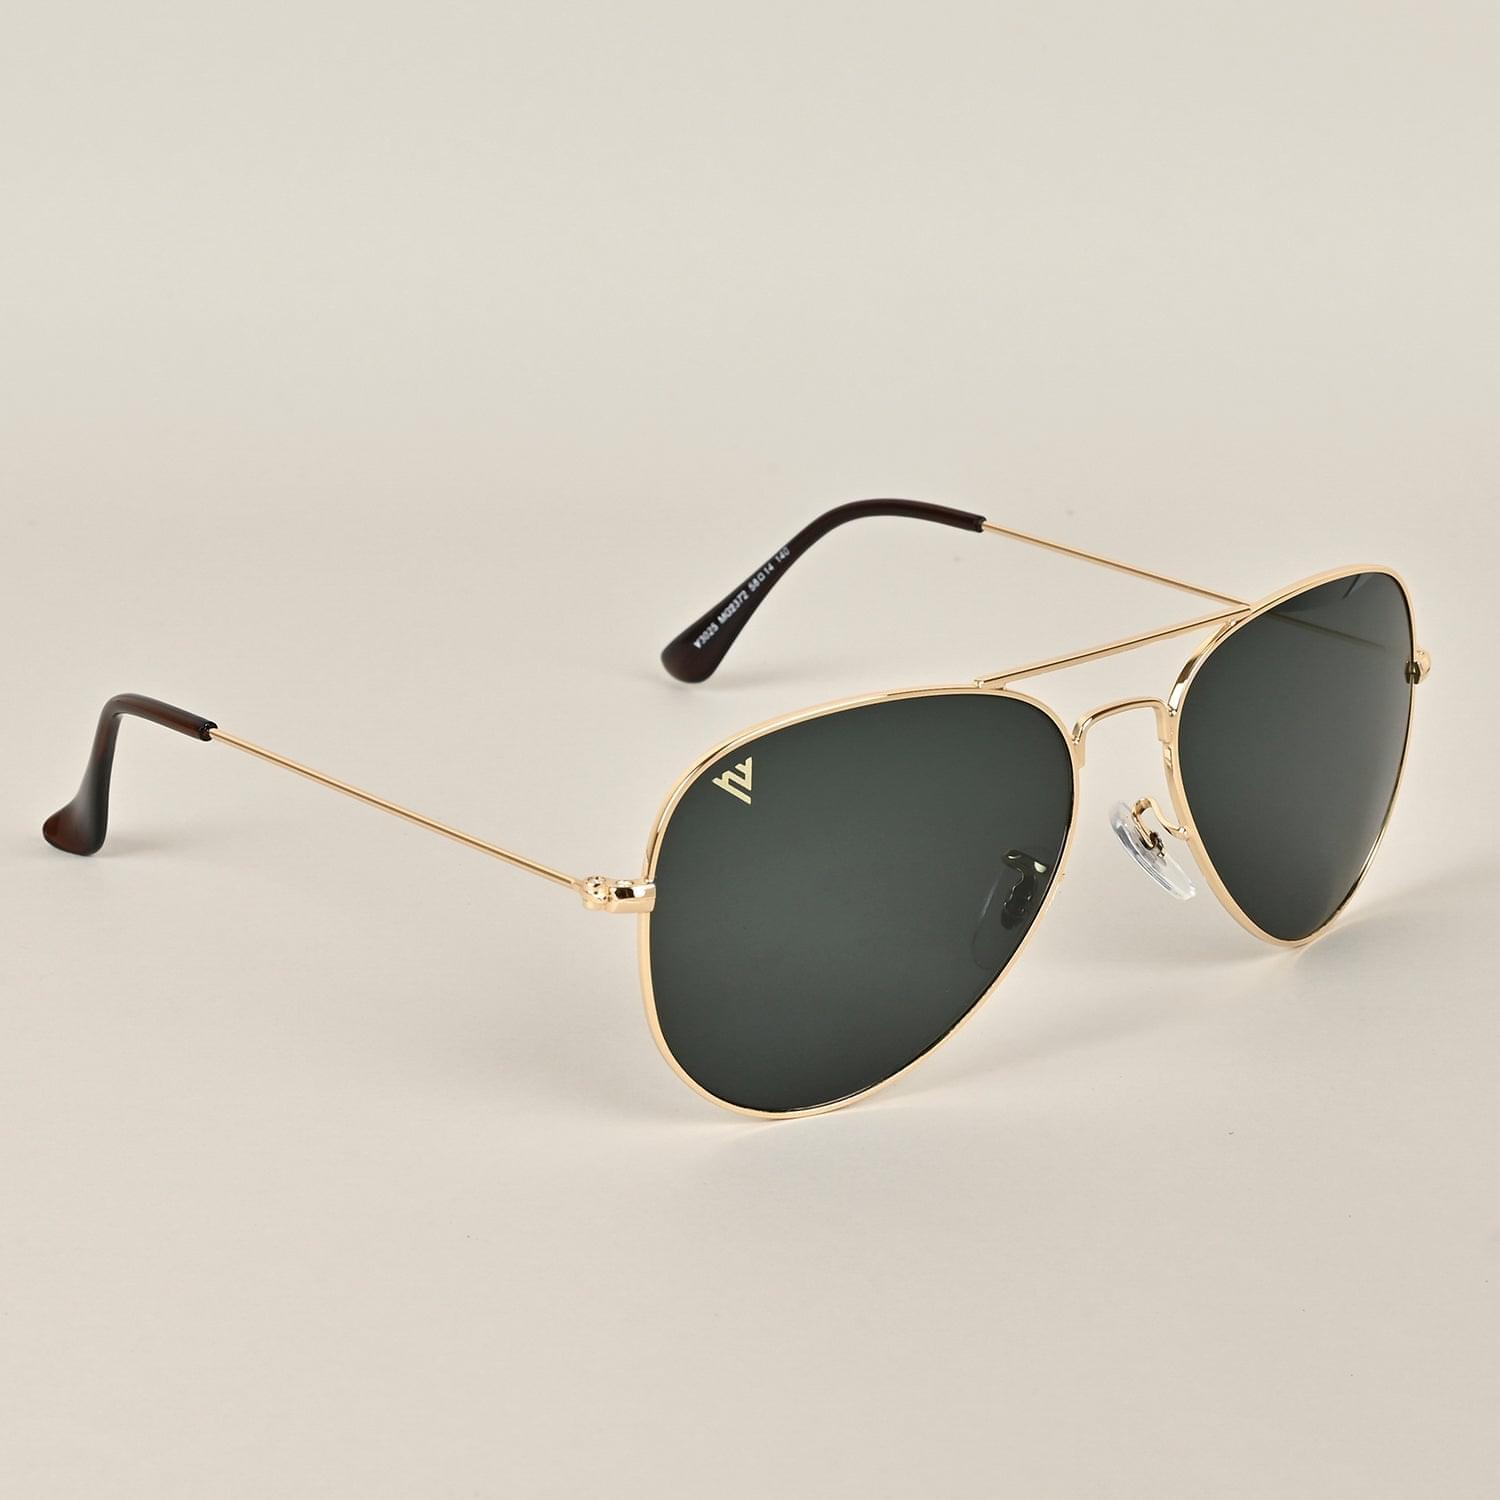 Voyage Black & Golden Aviator Sunglasses - MG2372